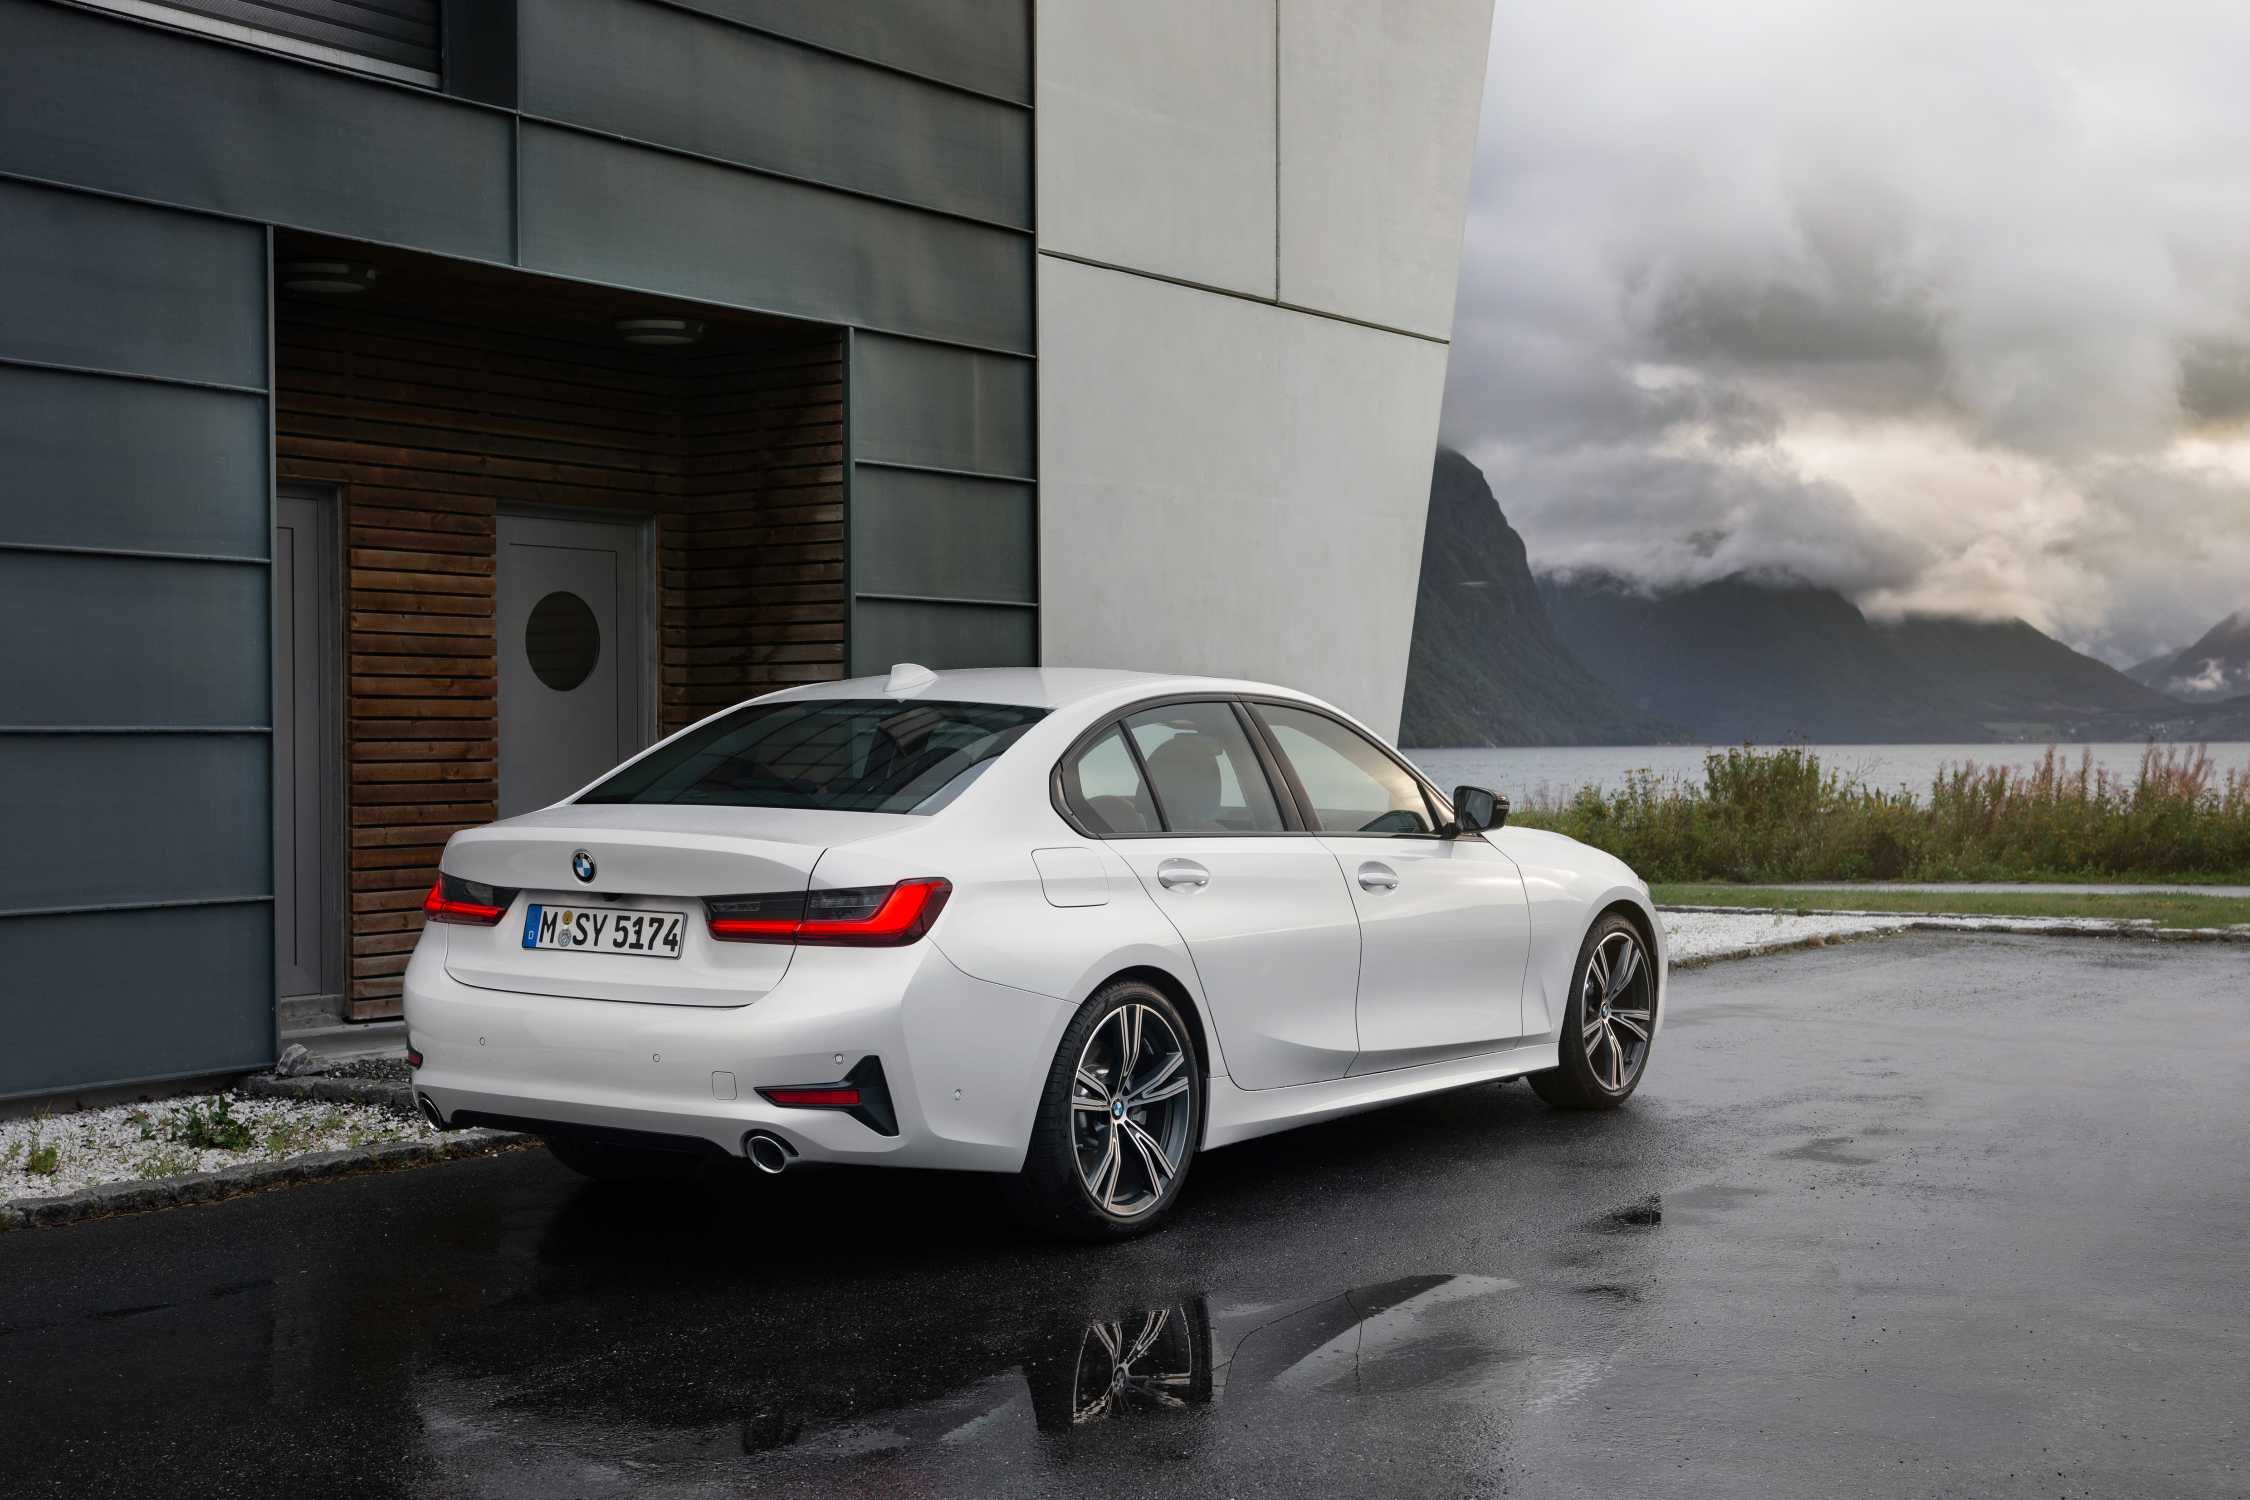 The all-new BMW Series Sedan, Model Line, Mineral white metallic, Rim 19” Styling Individual 793i (10/2018).